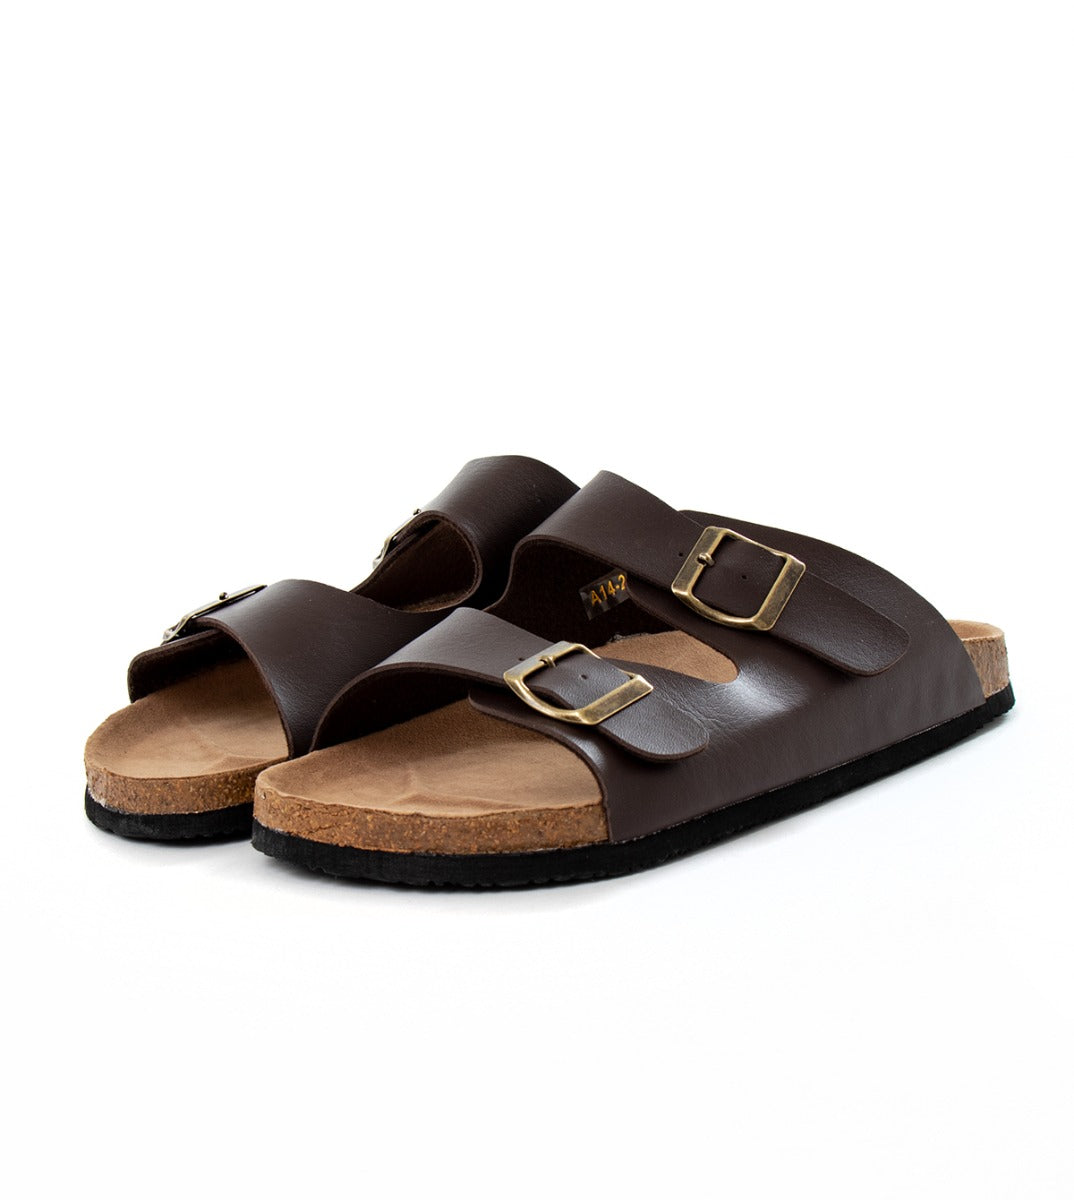 Open Sandal Faux Leather Shoes Slipper Men Unisex Double Buckle Sandals Brown GIOSAL-S1125A